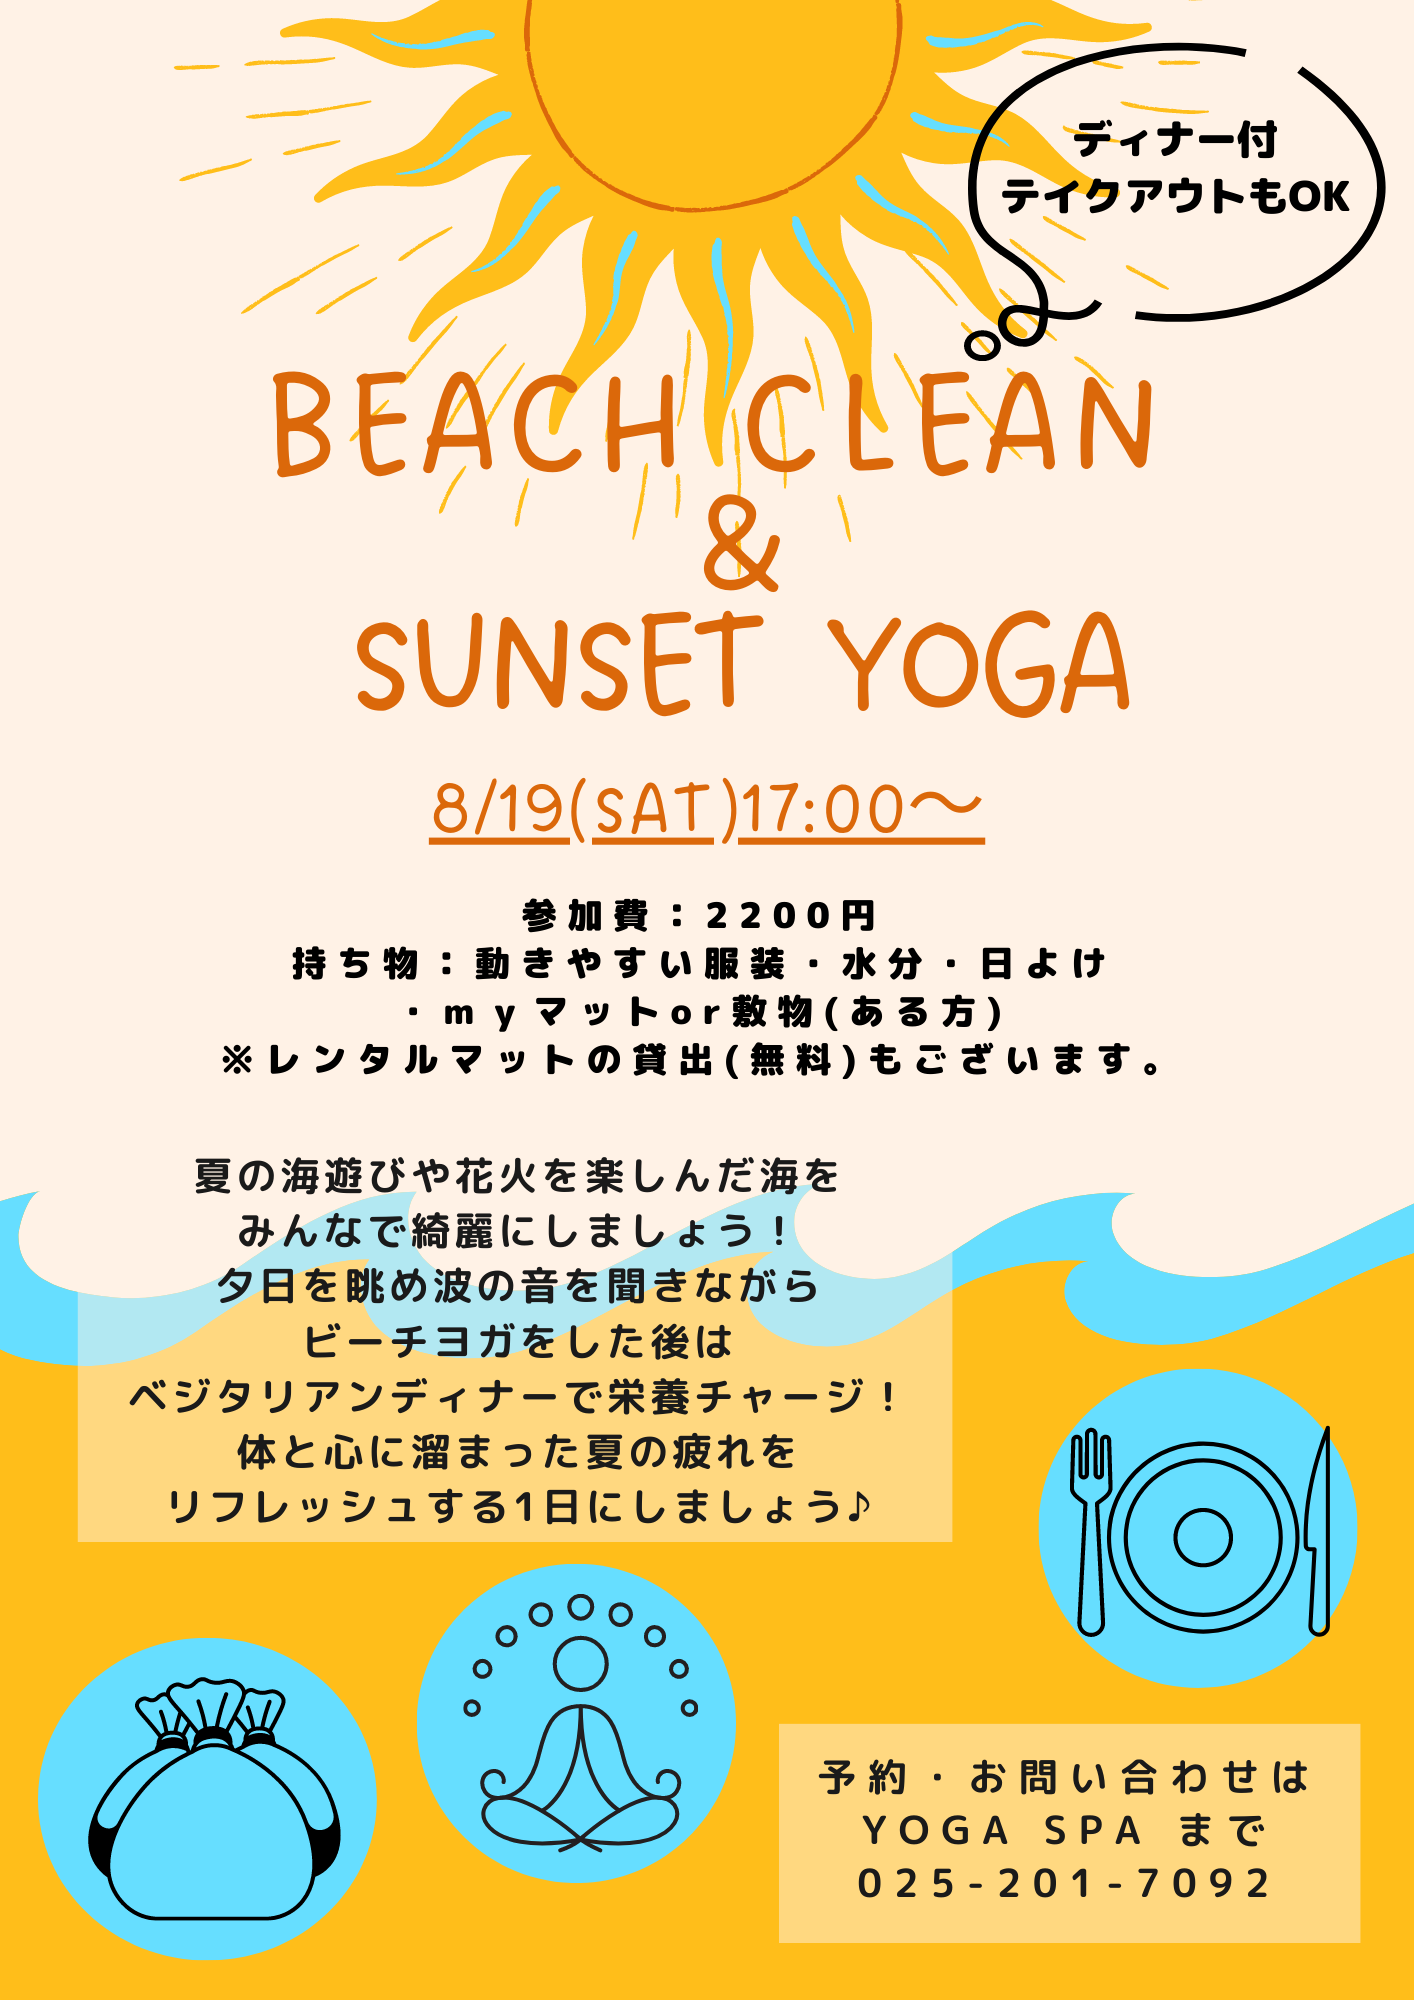 BEACH CLEAN & SUNSET YOGA